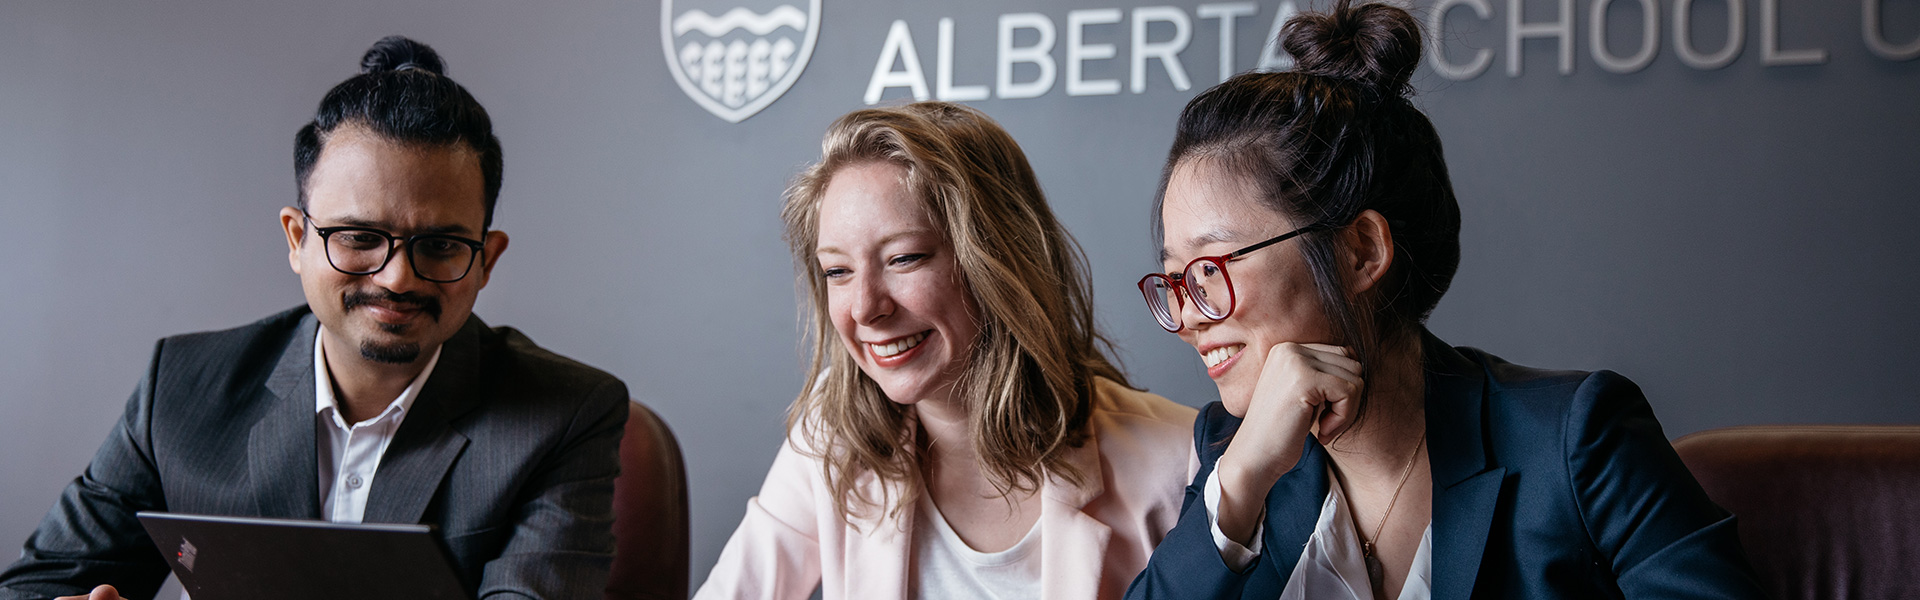 Business PhD | Alberta School of Business